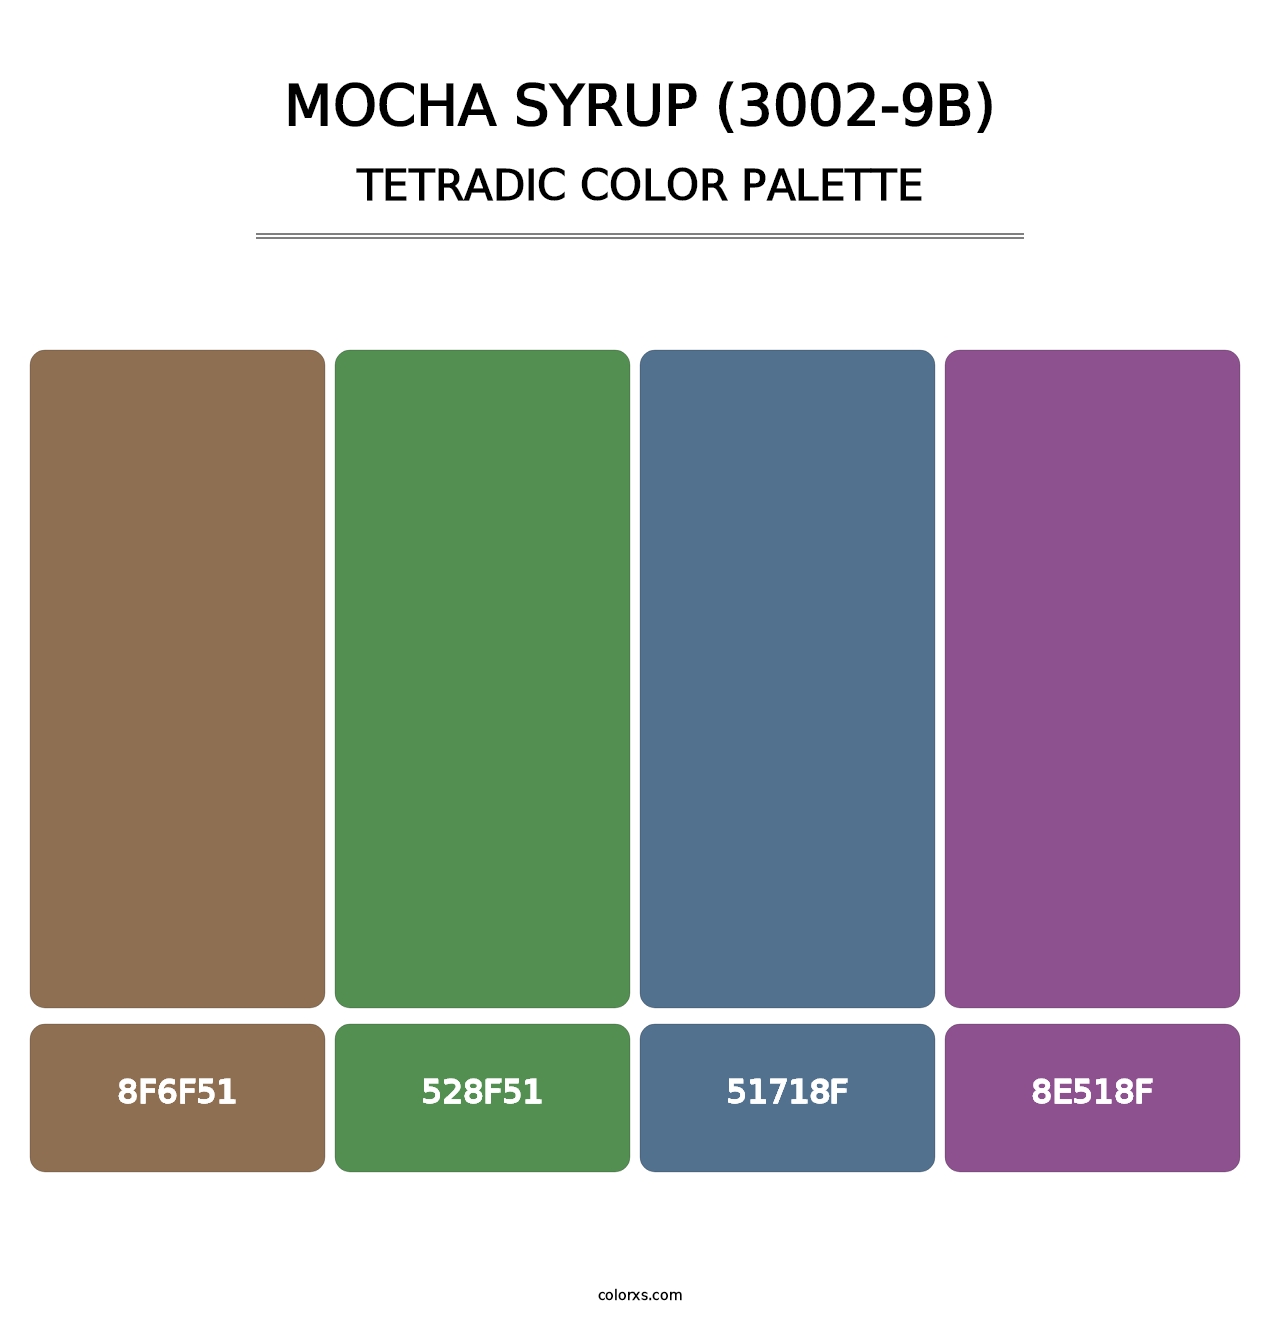 Mocha Syrup (3002-9B) - Tetradic Color Palette